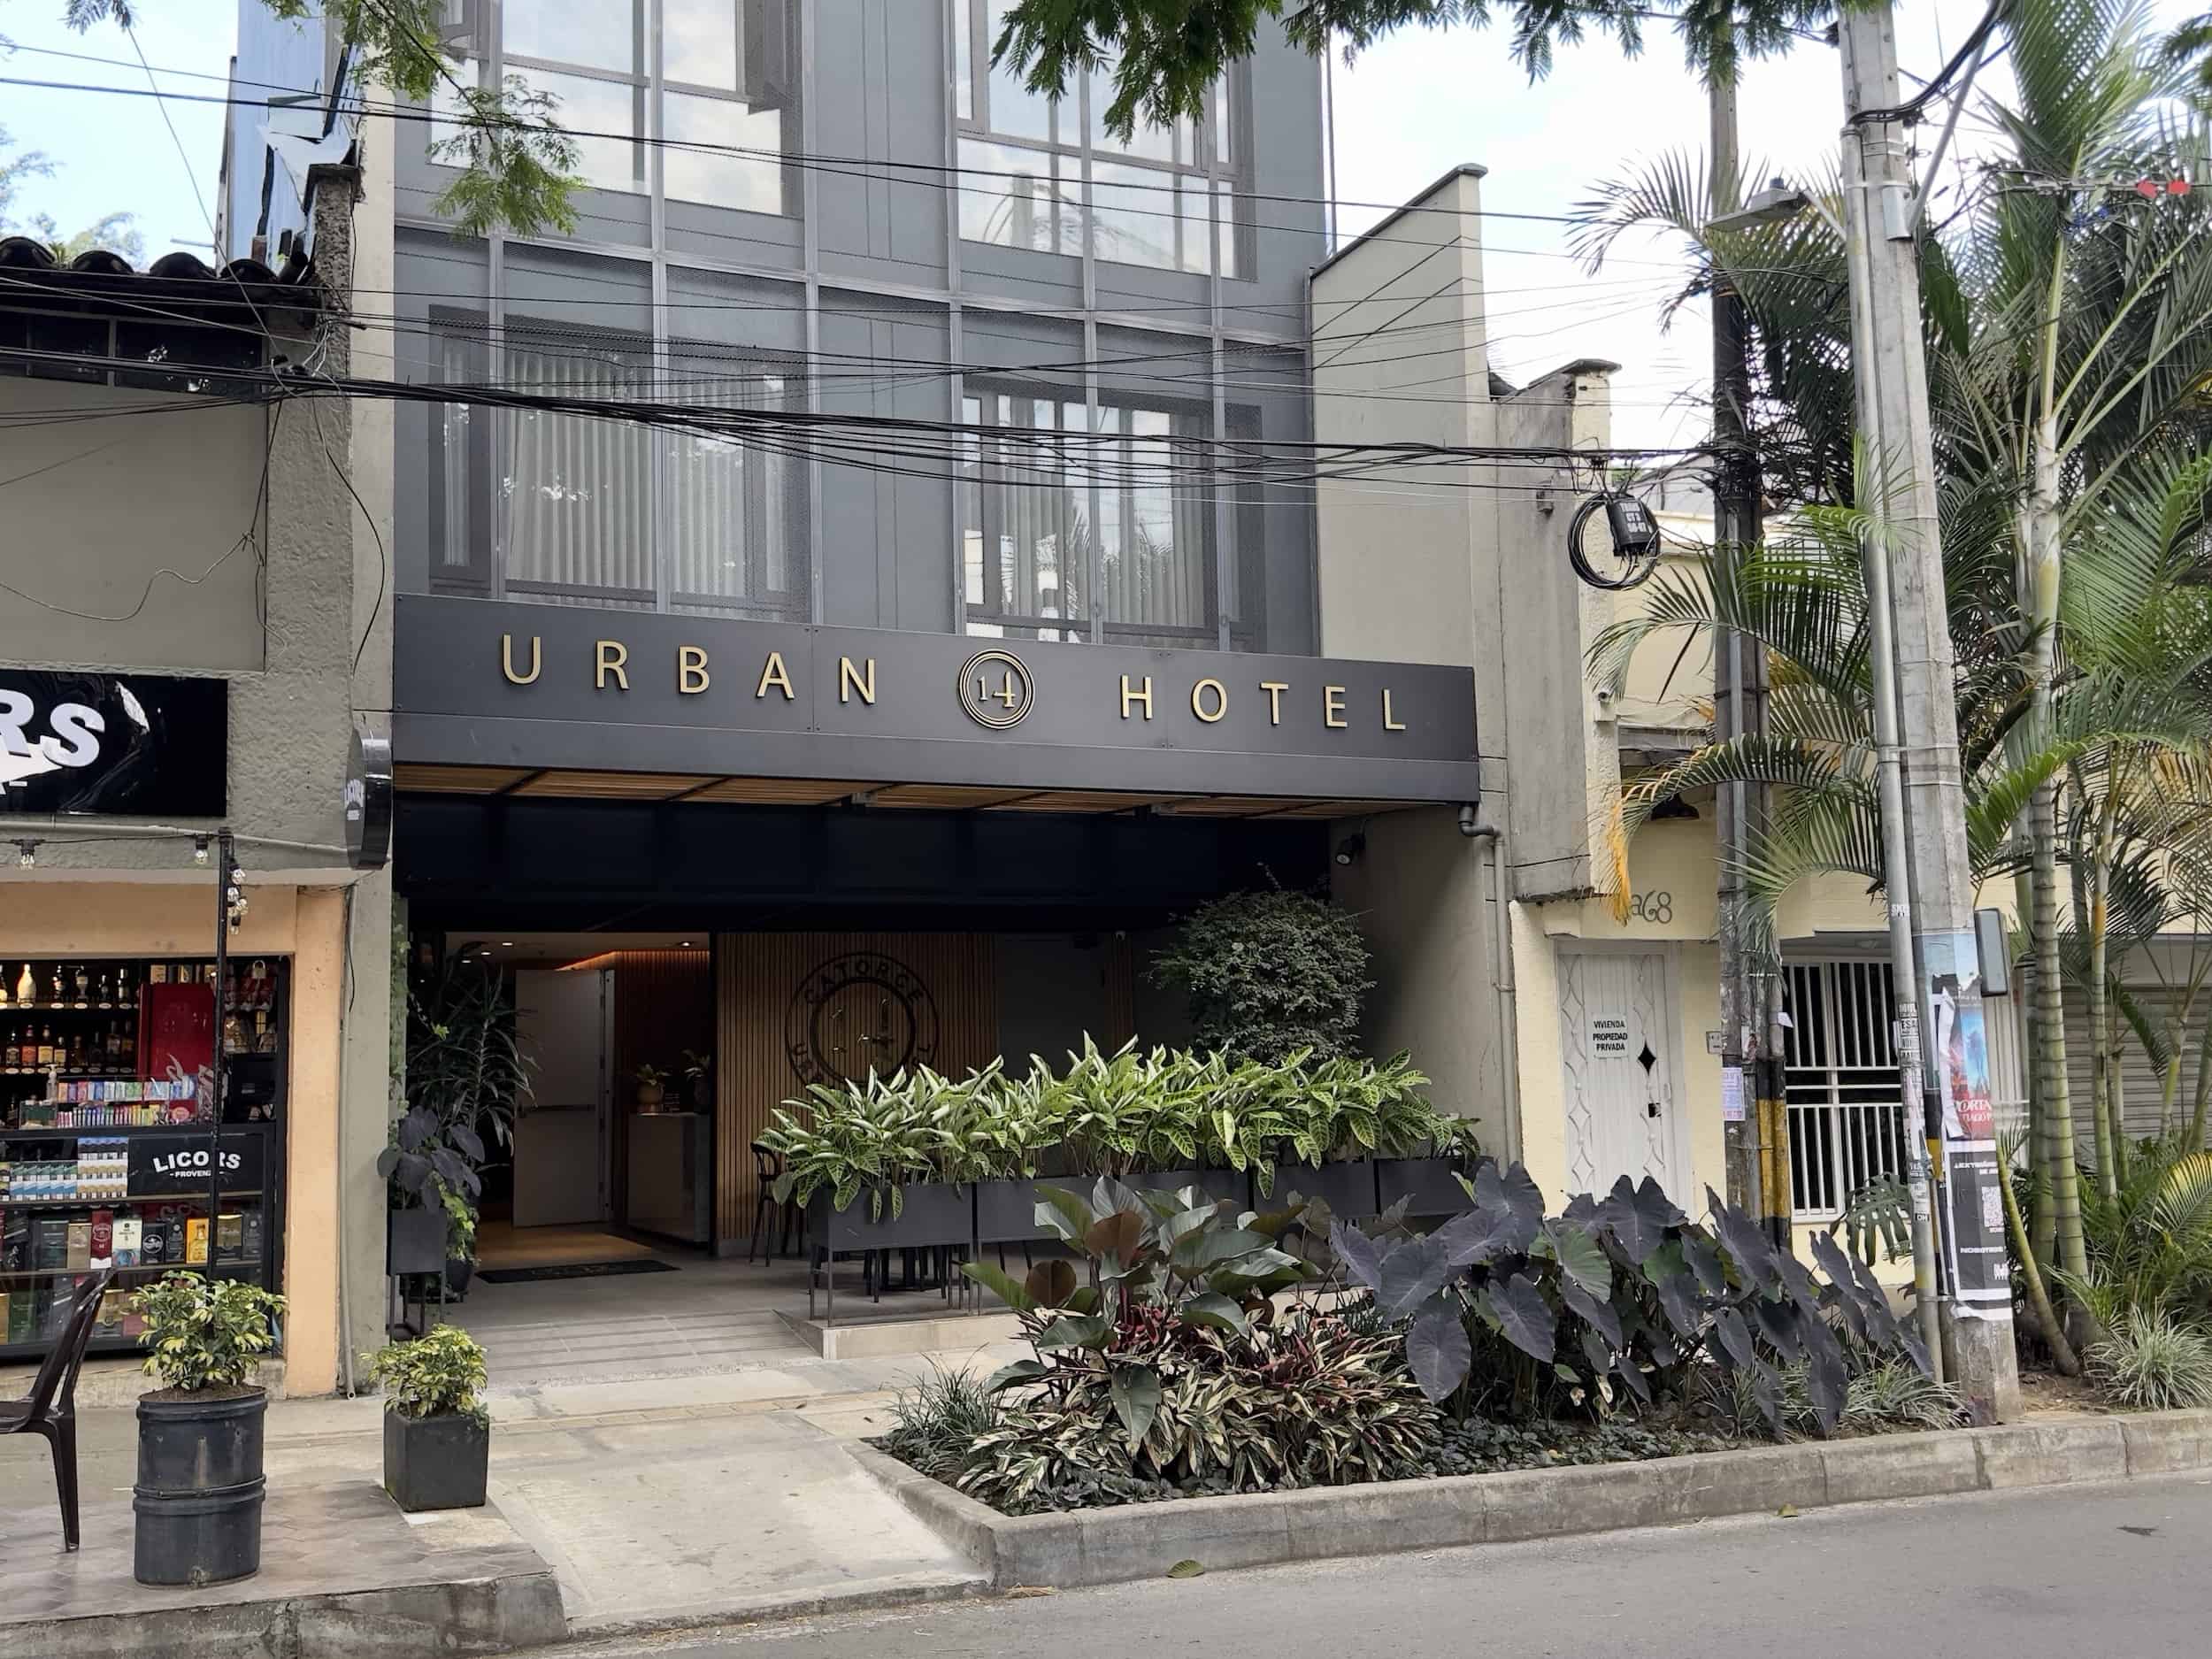 14 Urban Hotel in Provenza, Medellín, Colombia